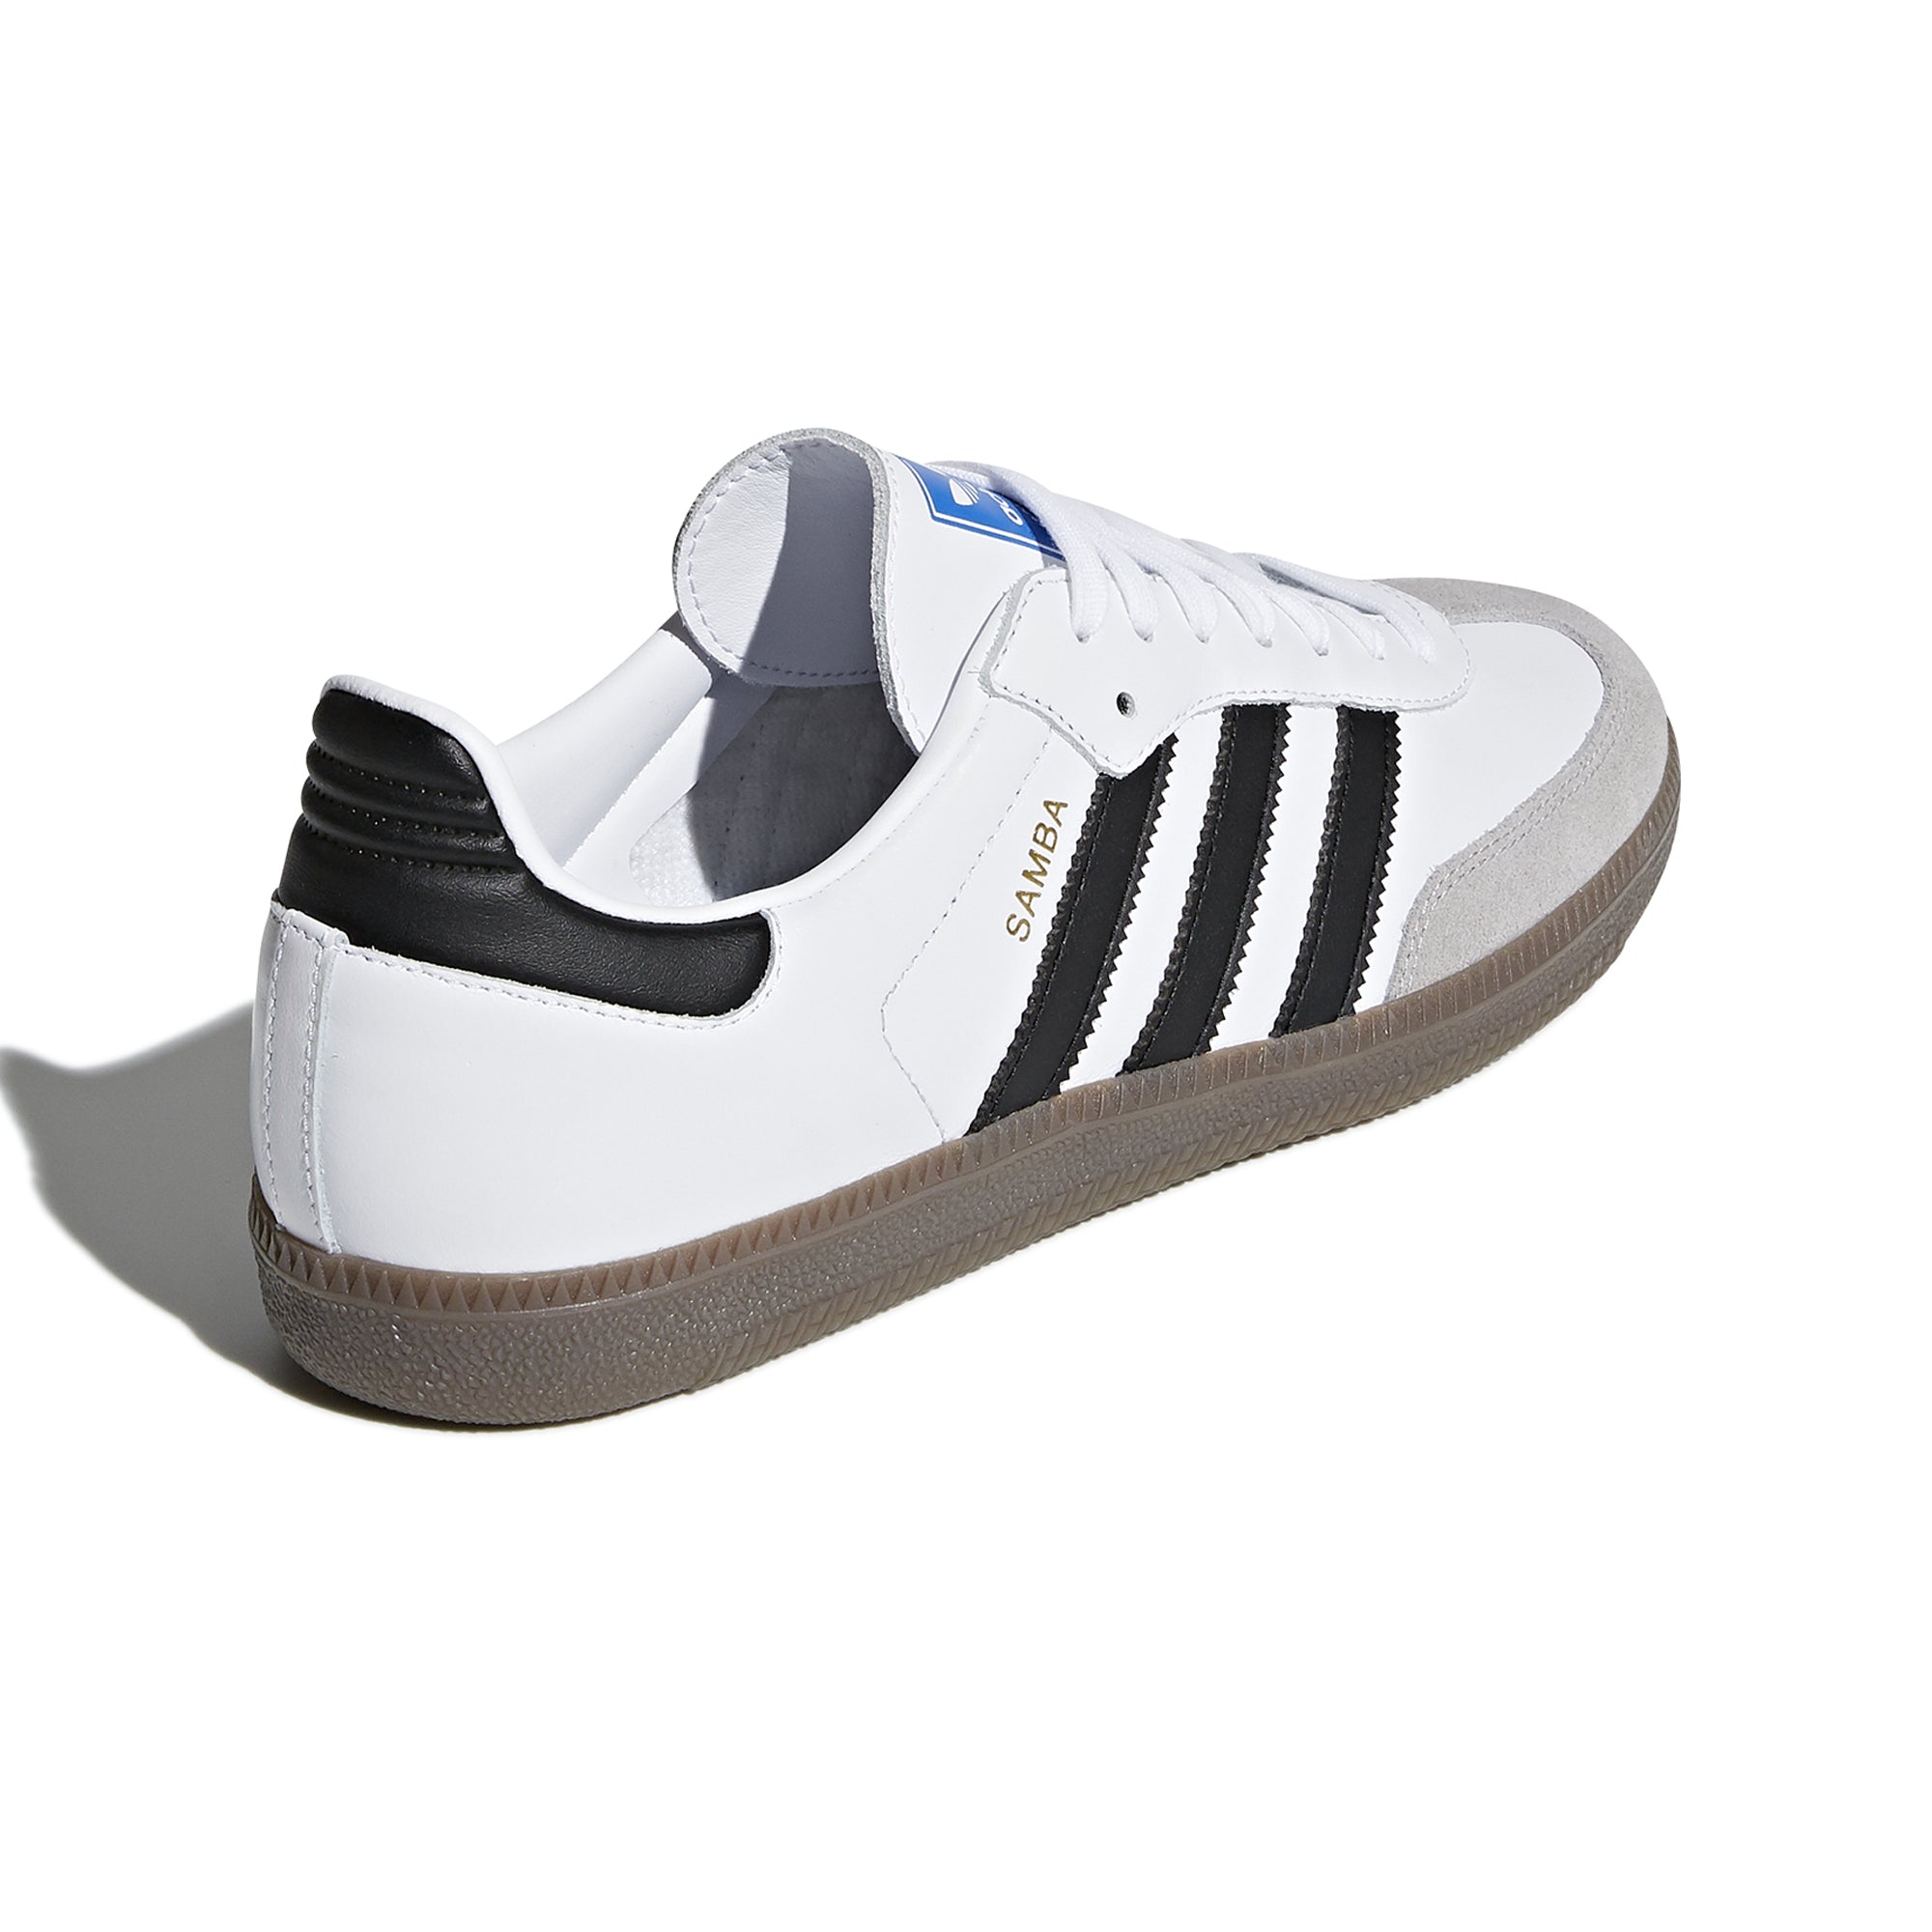 Samba OG Shoes B75806